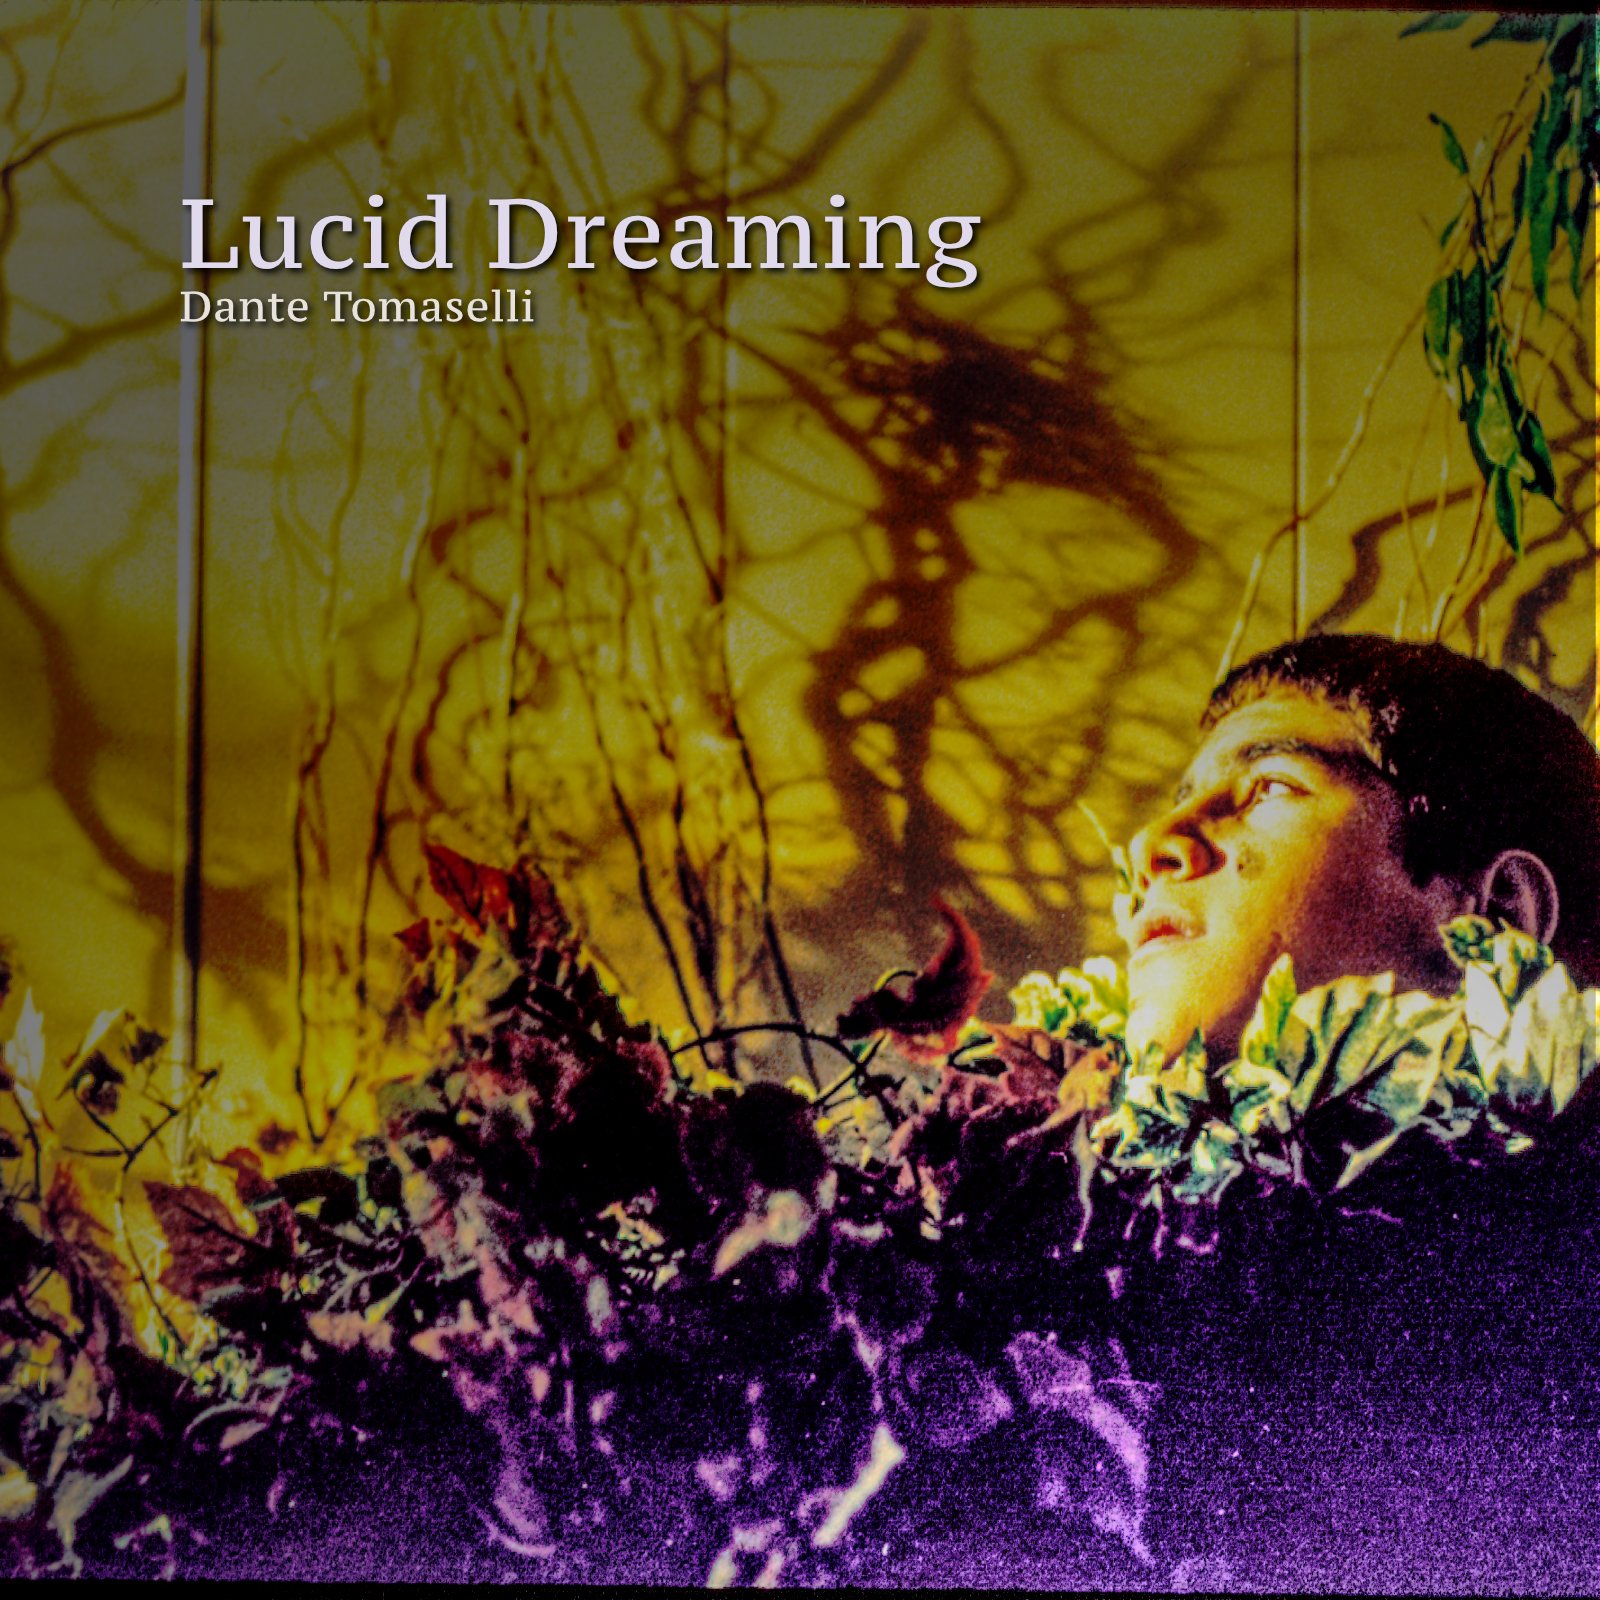 Данте Дрим. Lucid Dreams альбом.